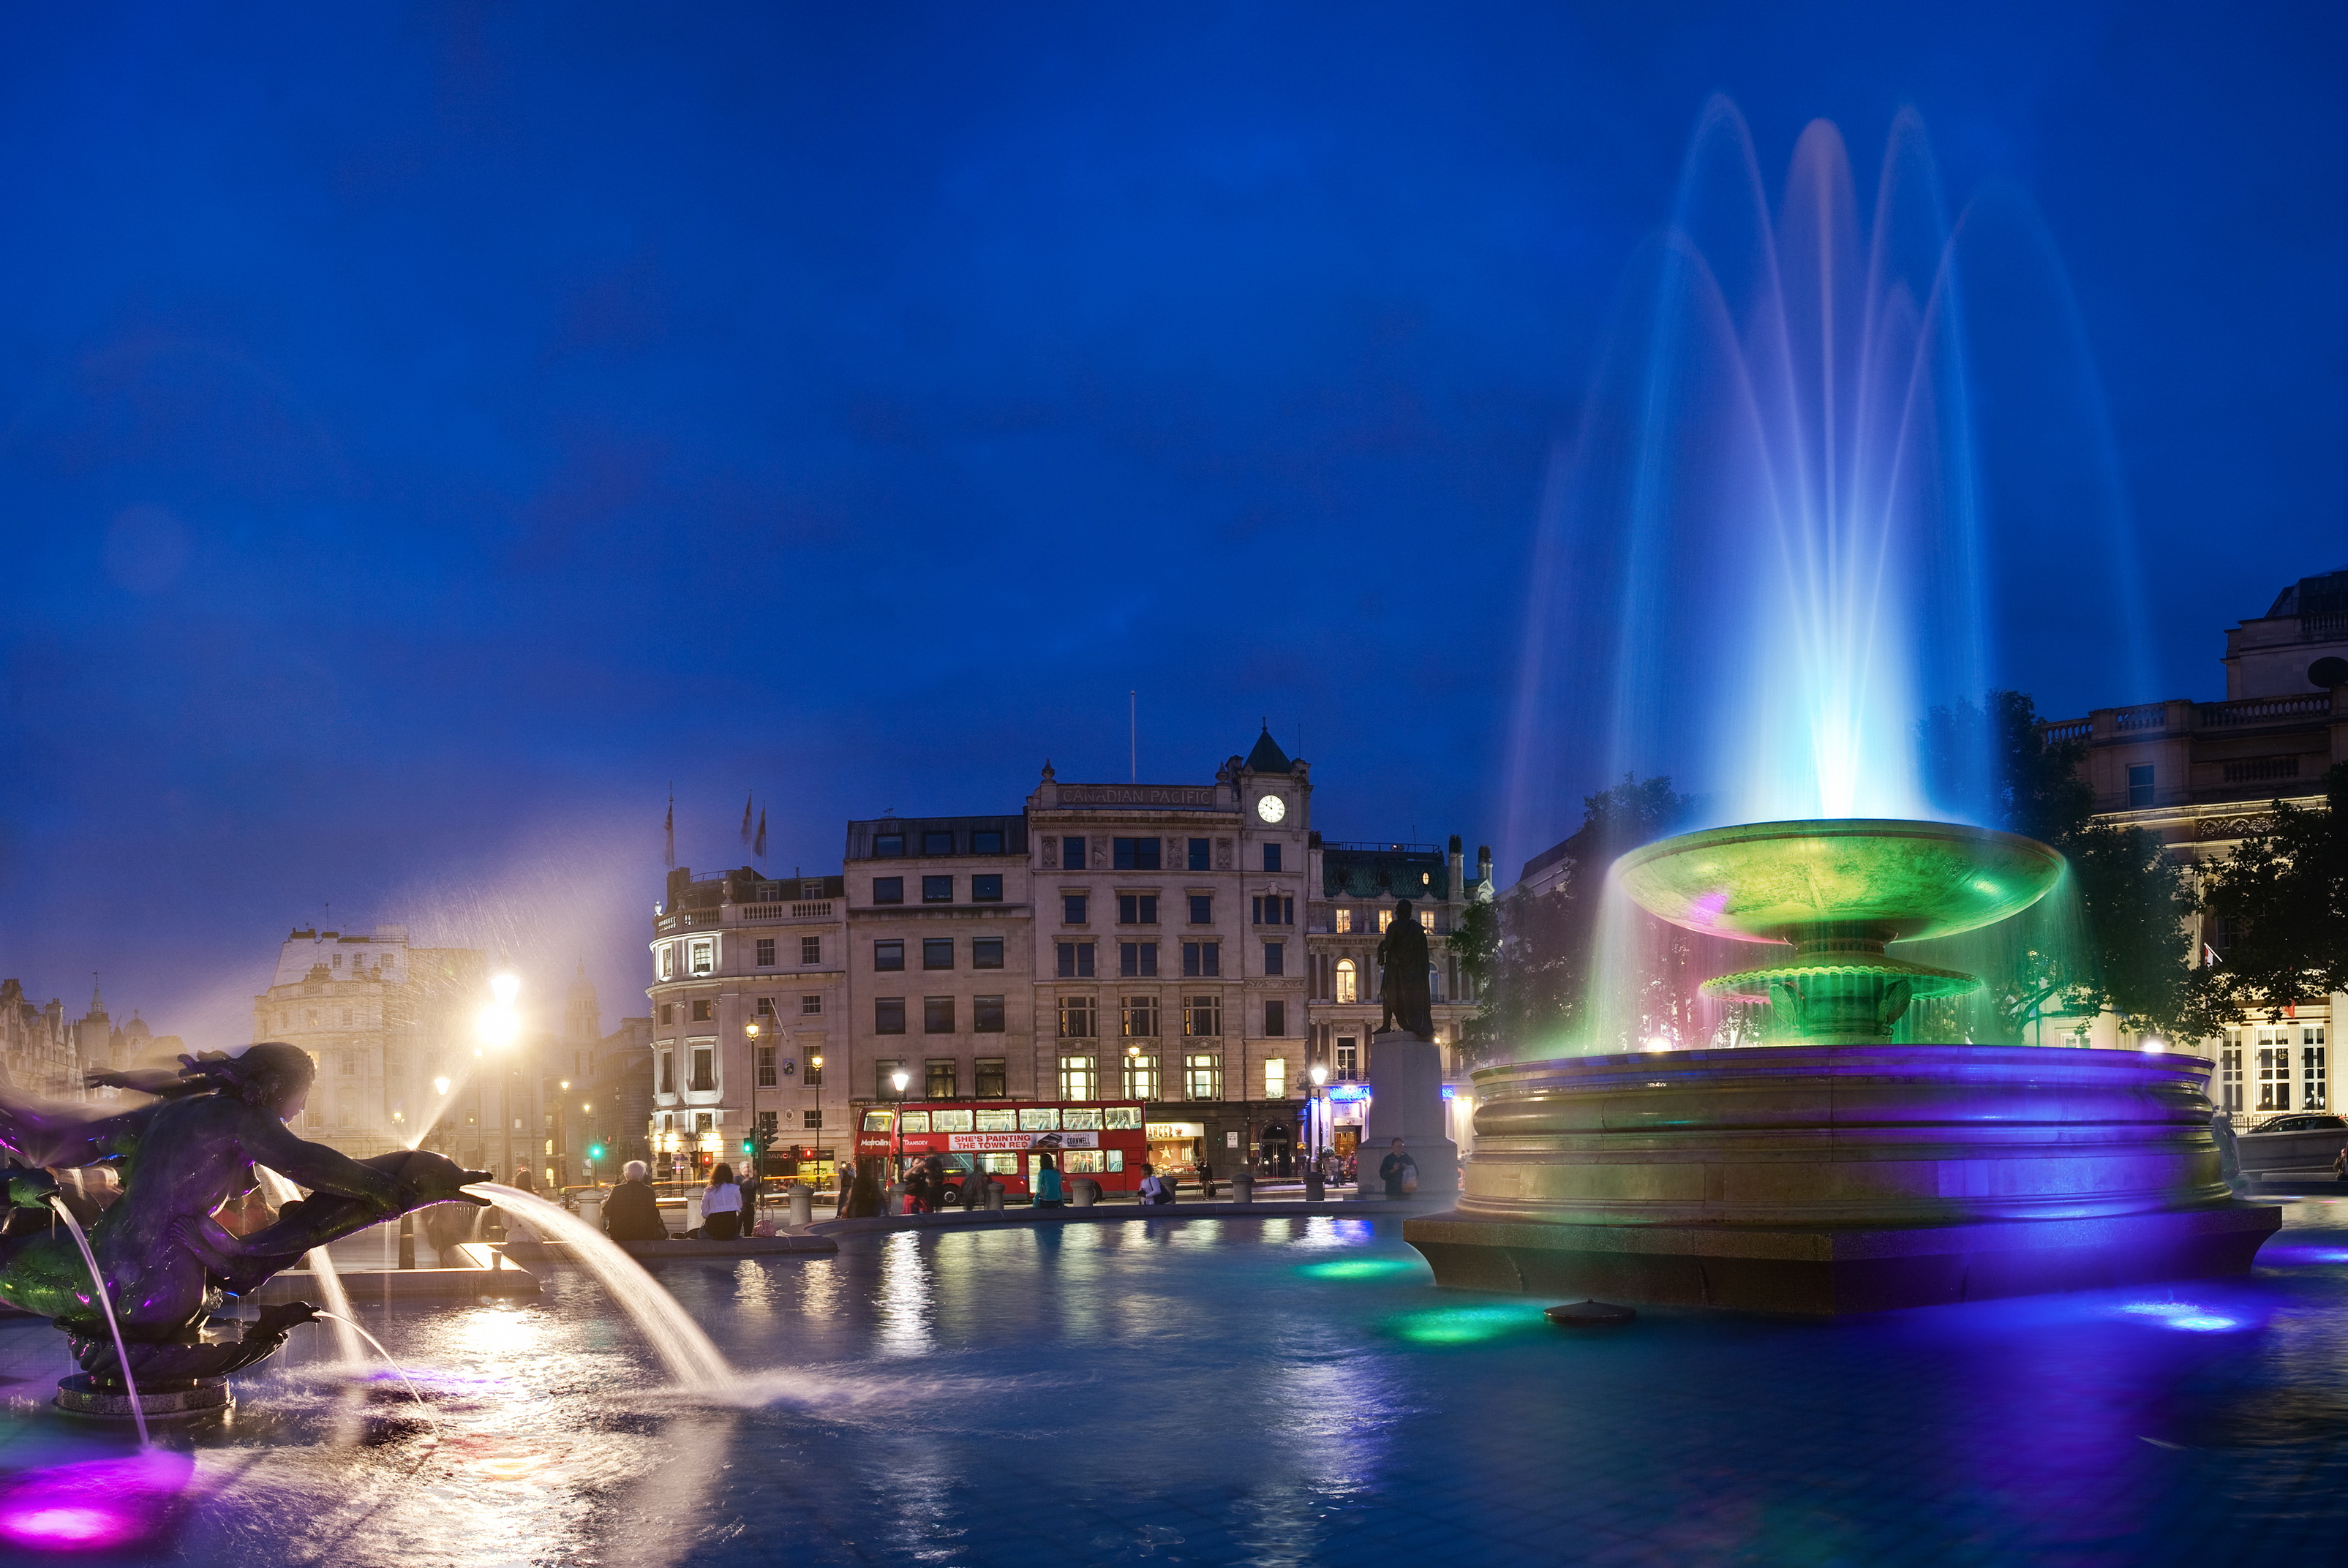 LED lighting at fountains in Trafalgar Square, London. Photo: David Iliff, License: CC-BY-SA 3.0.